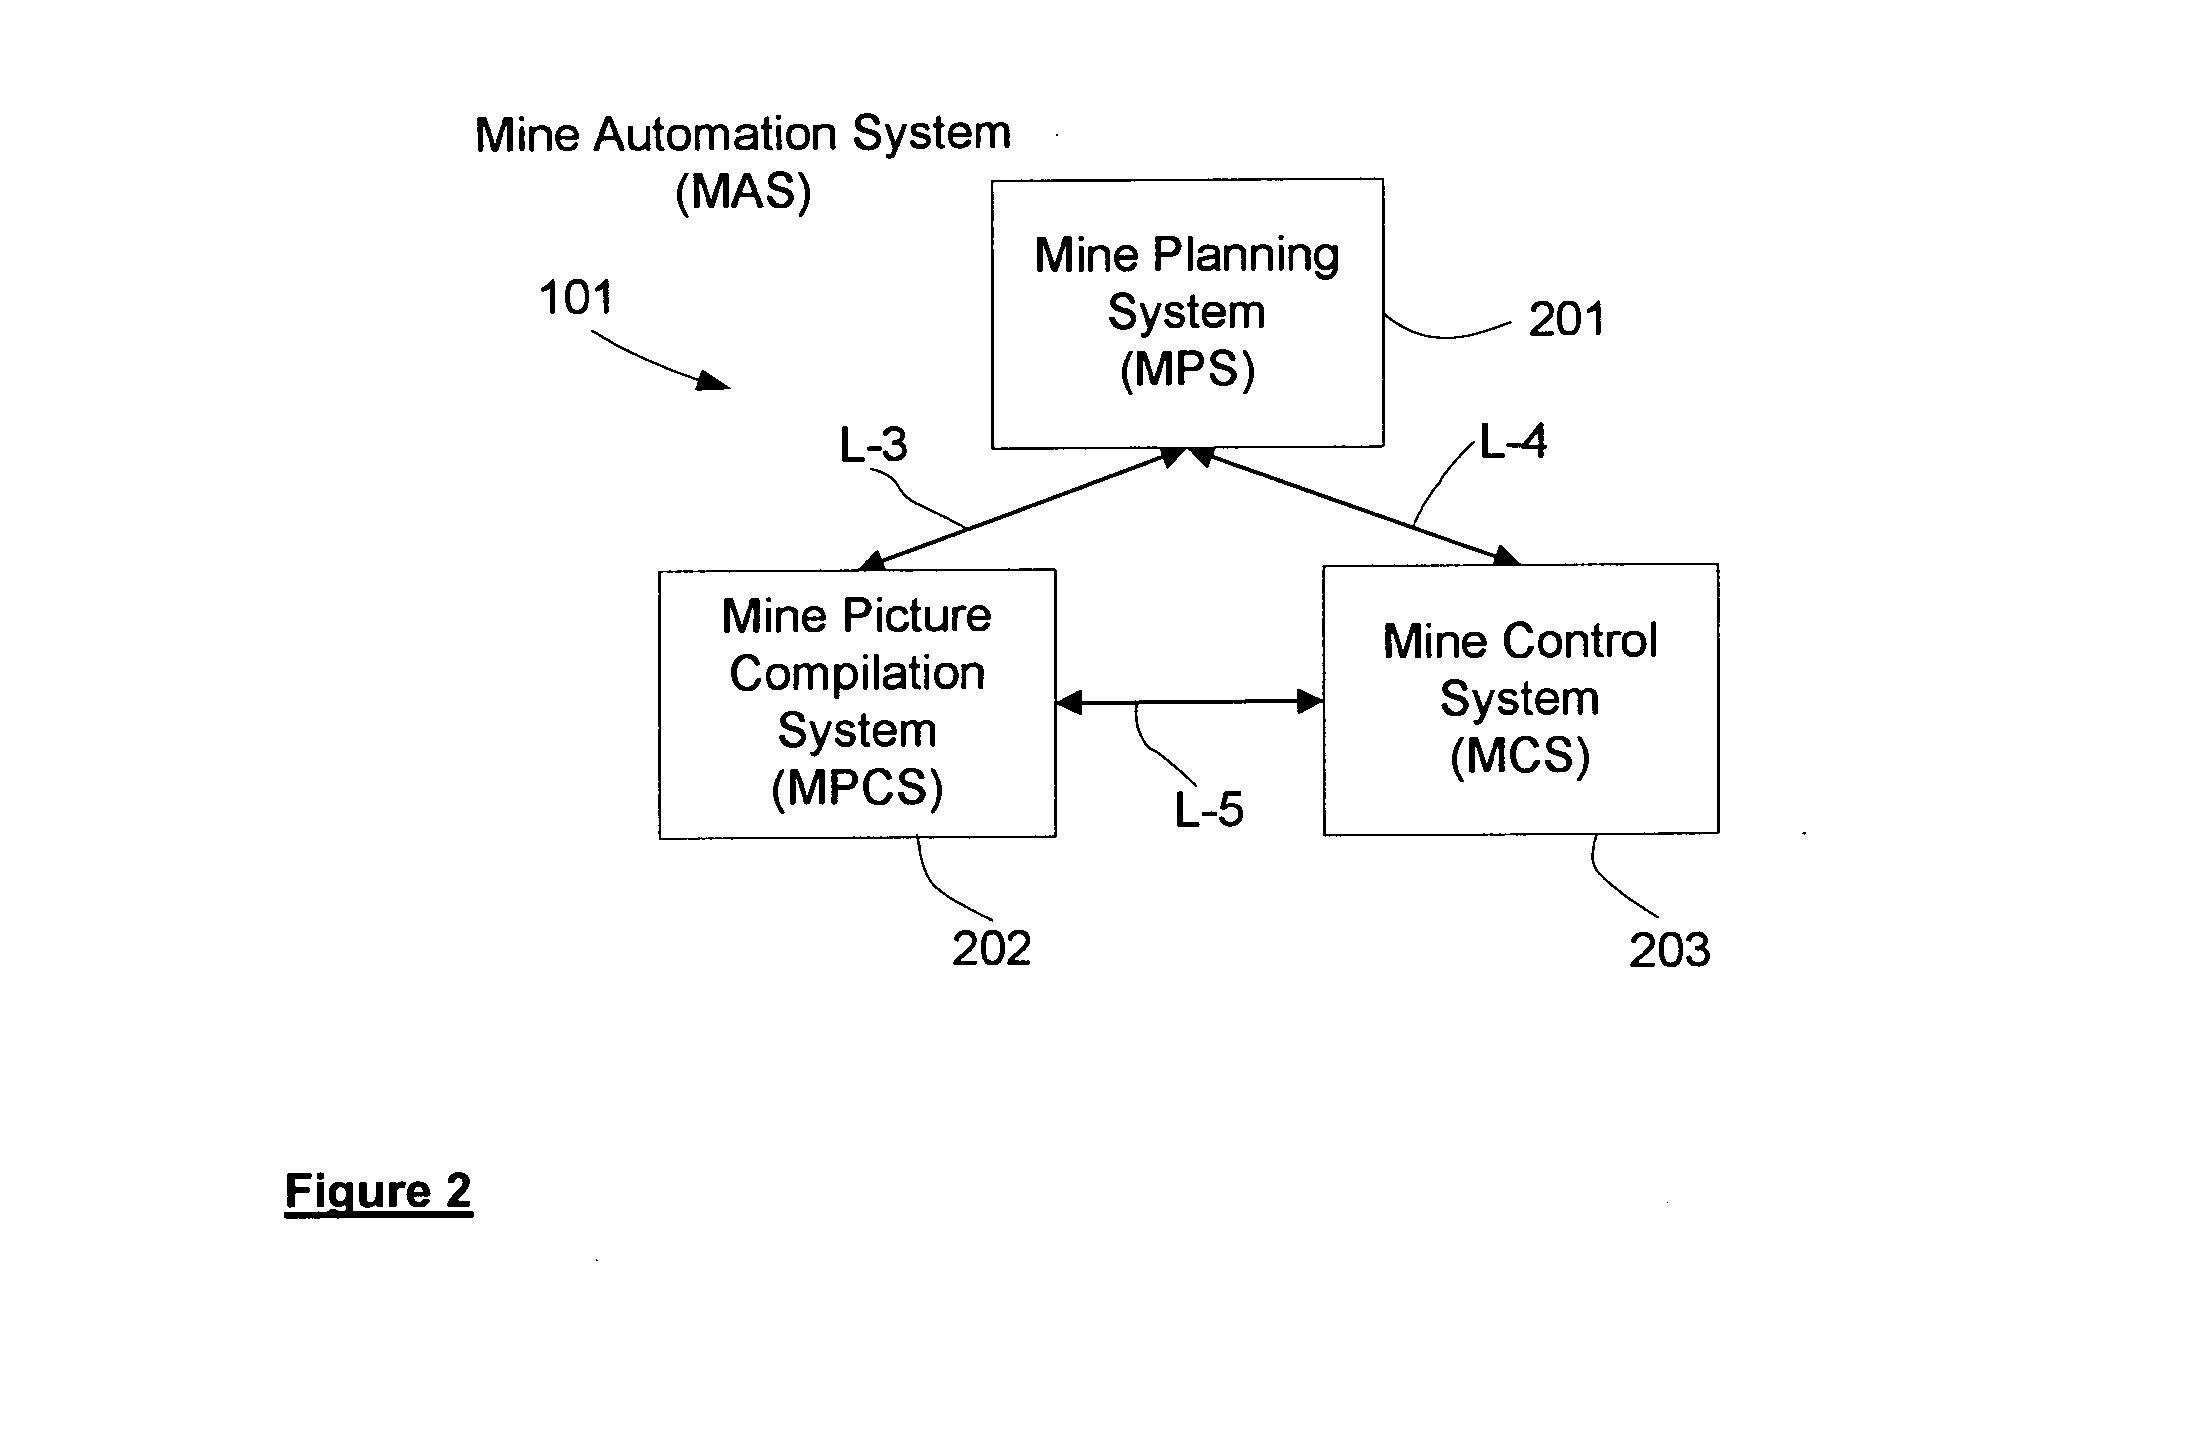 Planning system for autonomous operation